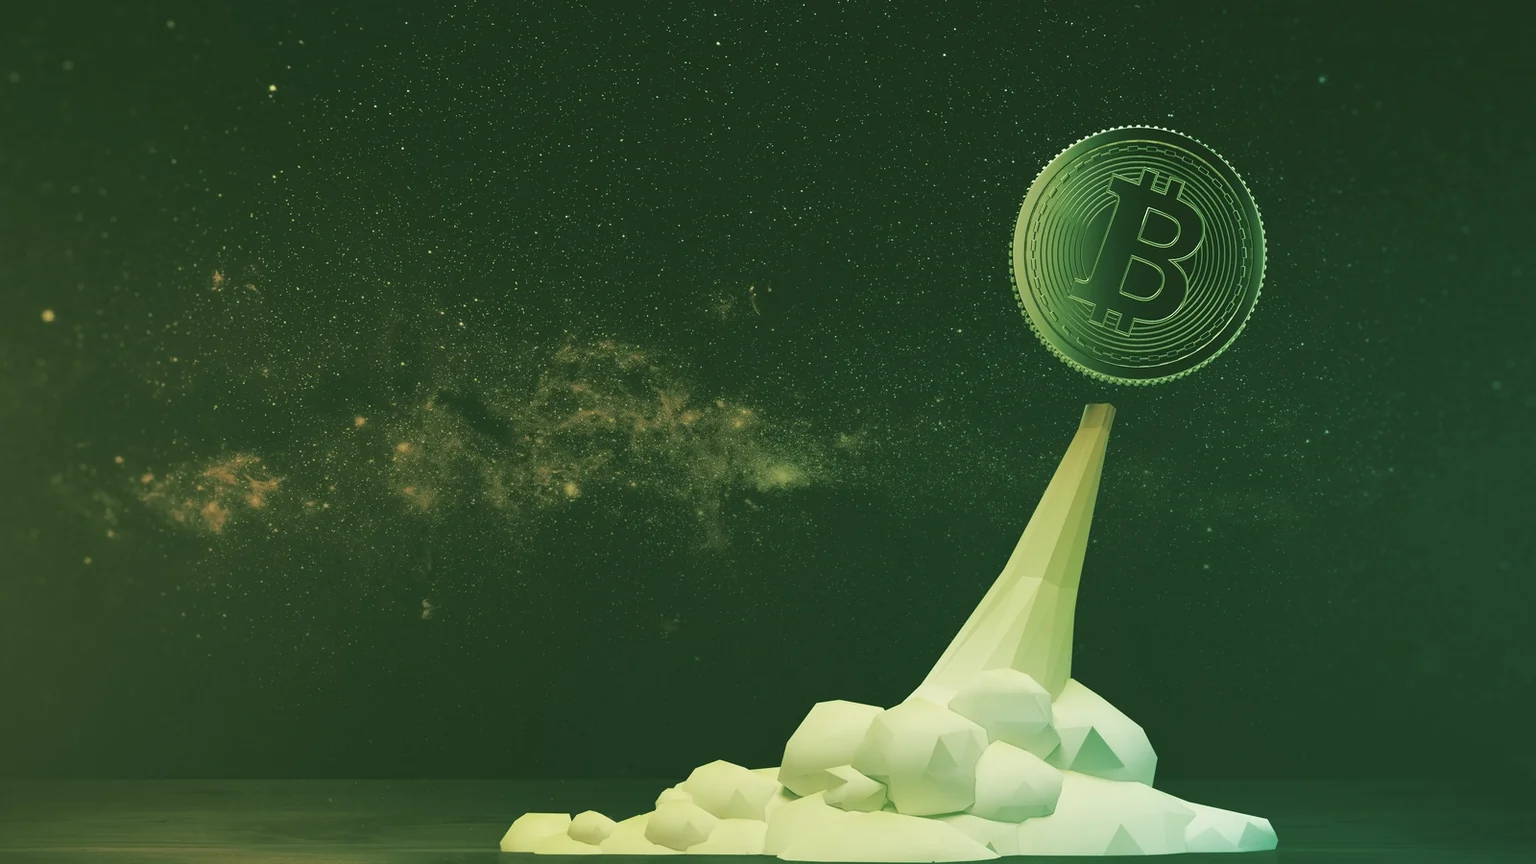 Bitcoin rockets upward. Image: Shutterstock